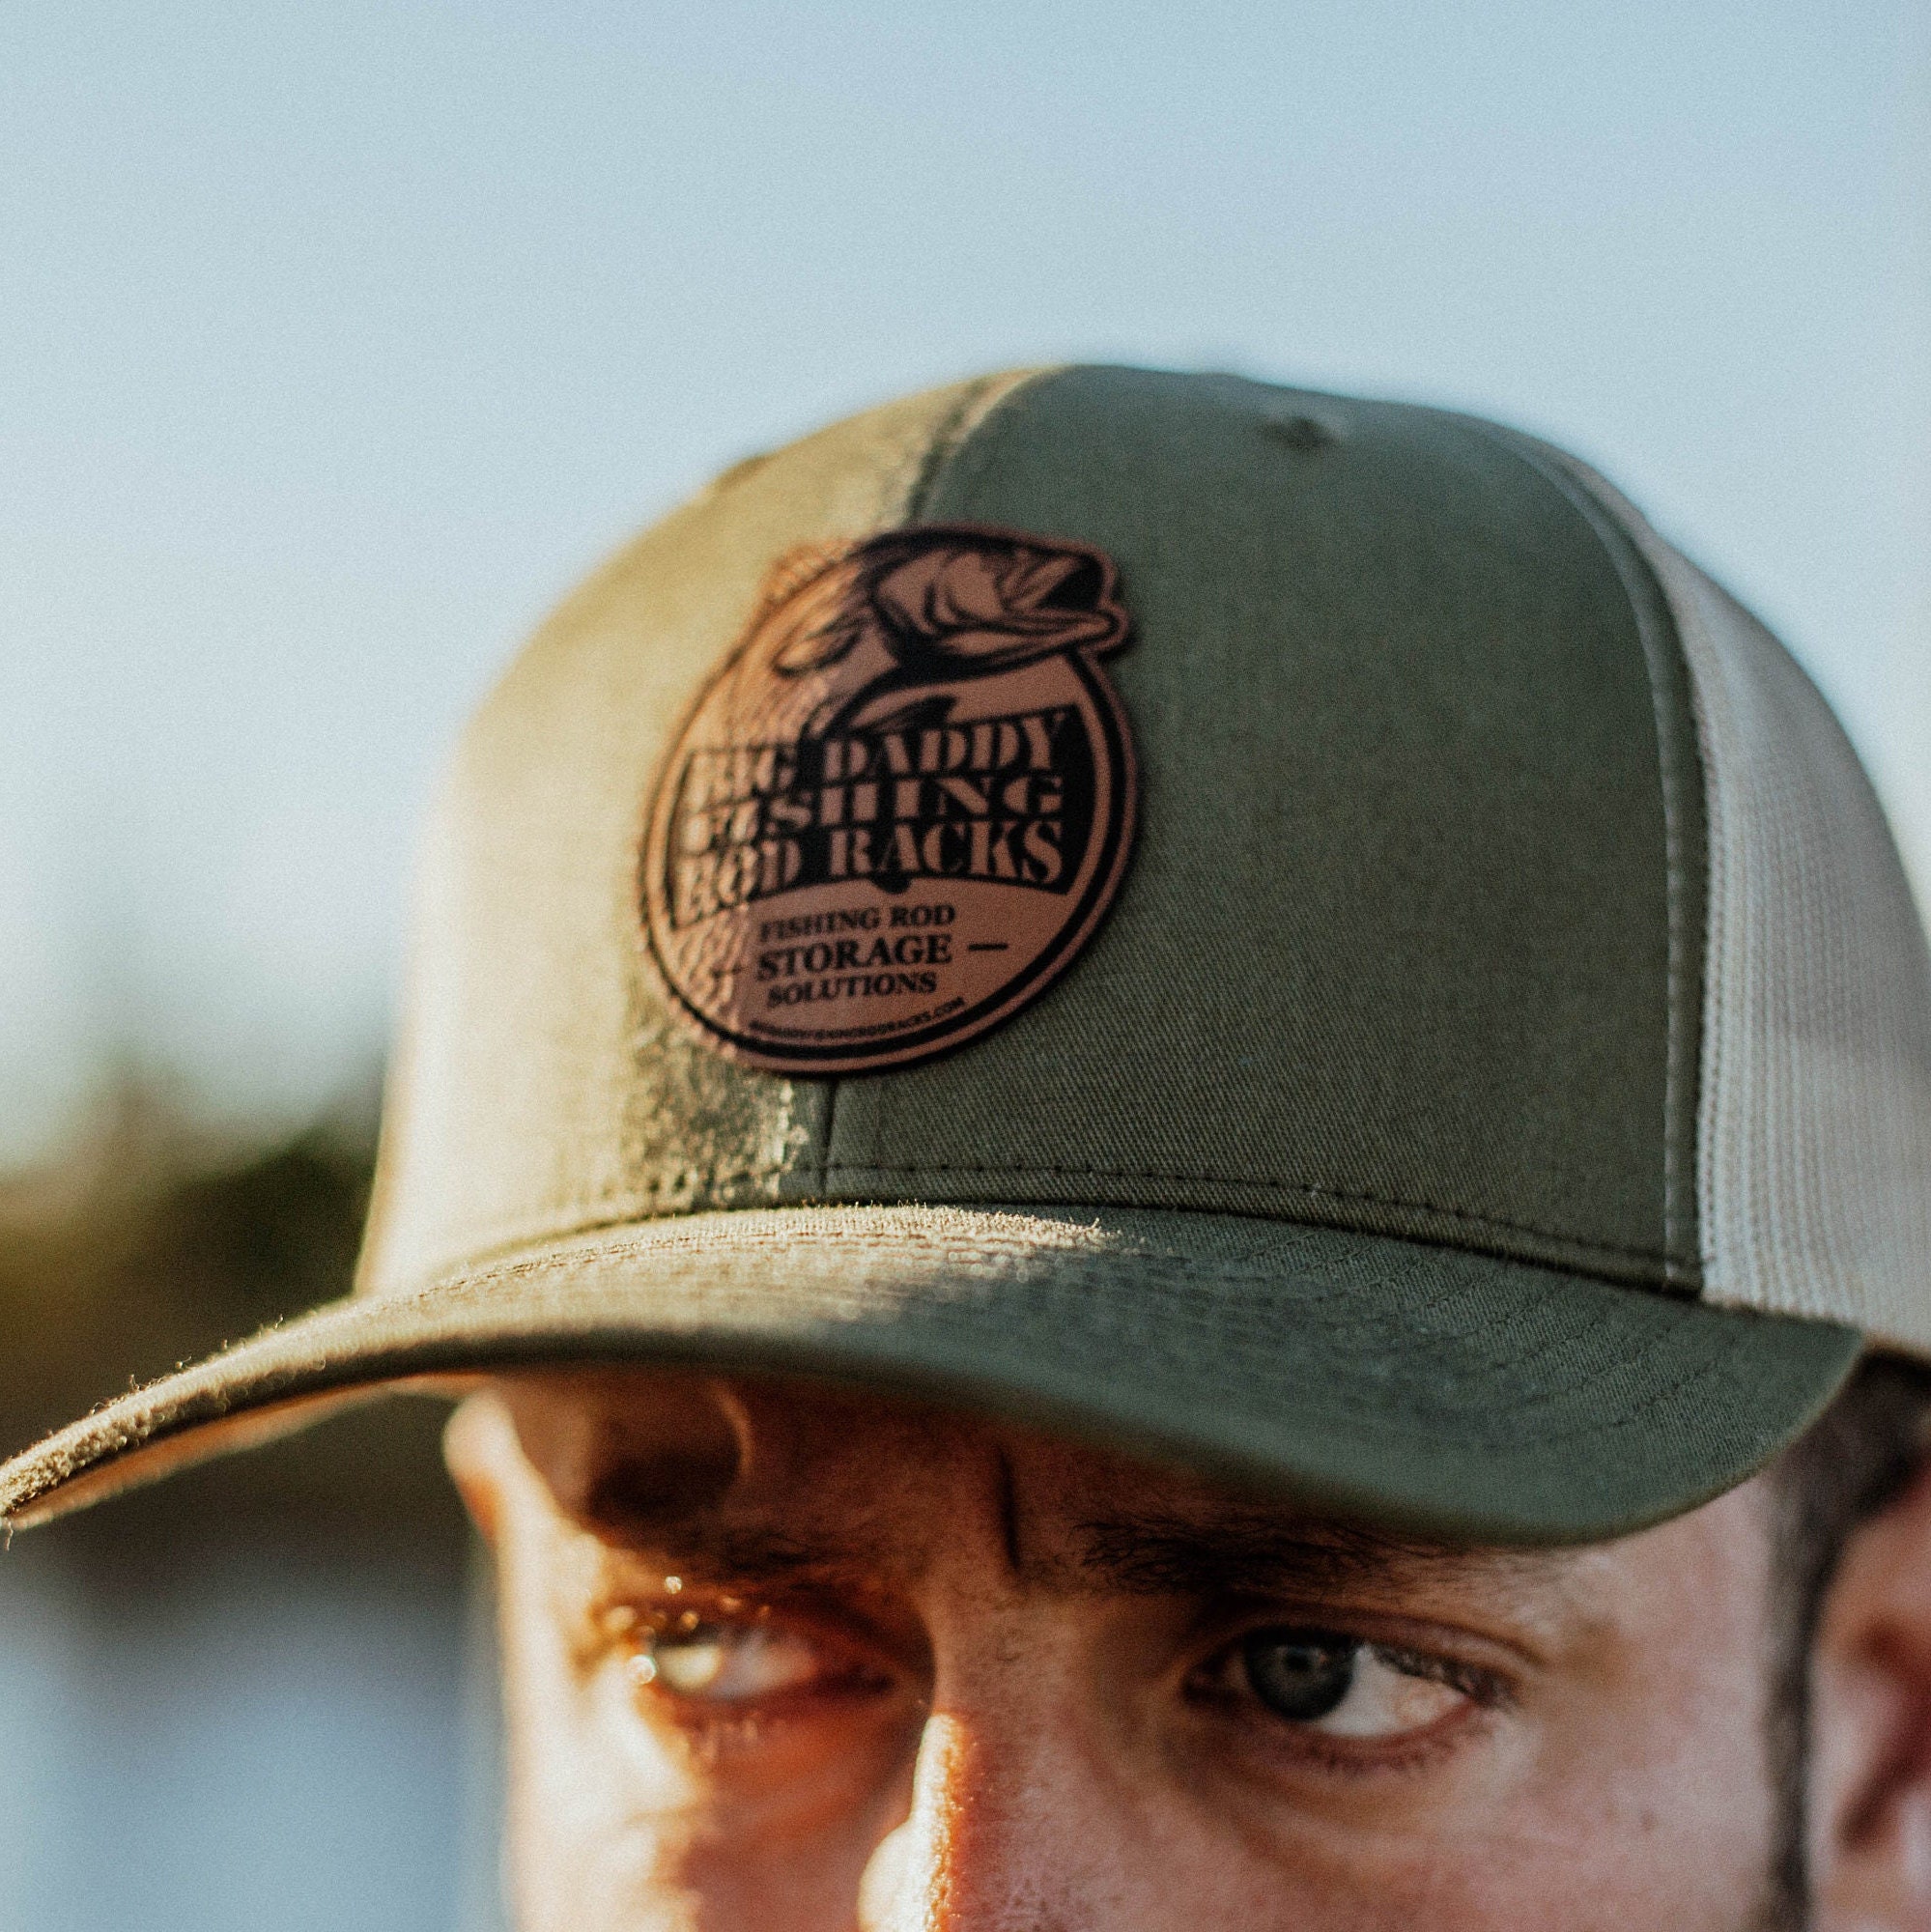 Big Daddy Fishing Rod Racks Leather Patch Green Snapback Hat - Stylish Angler Cap, Fishing Enthusiast Gift